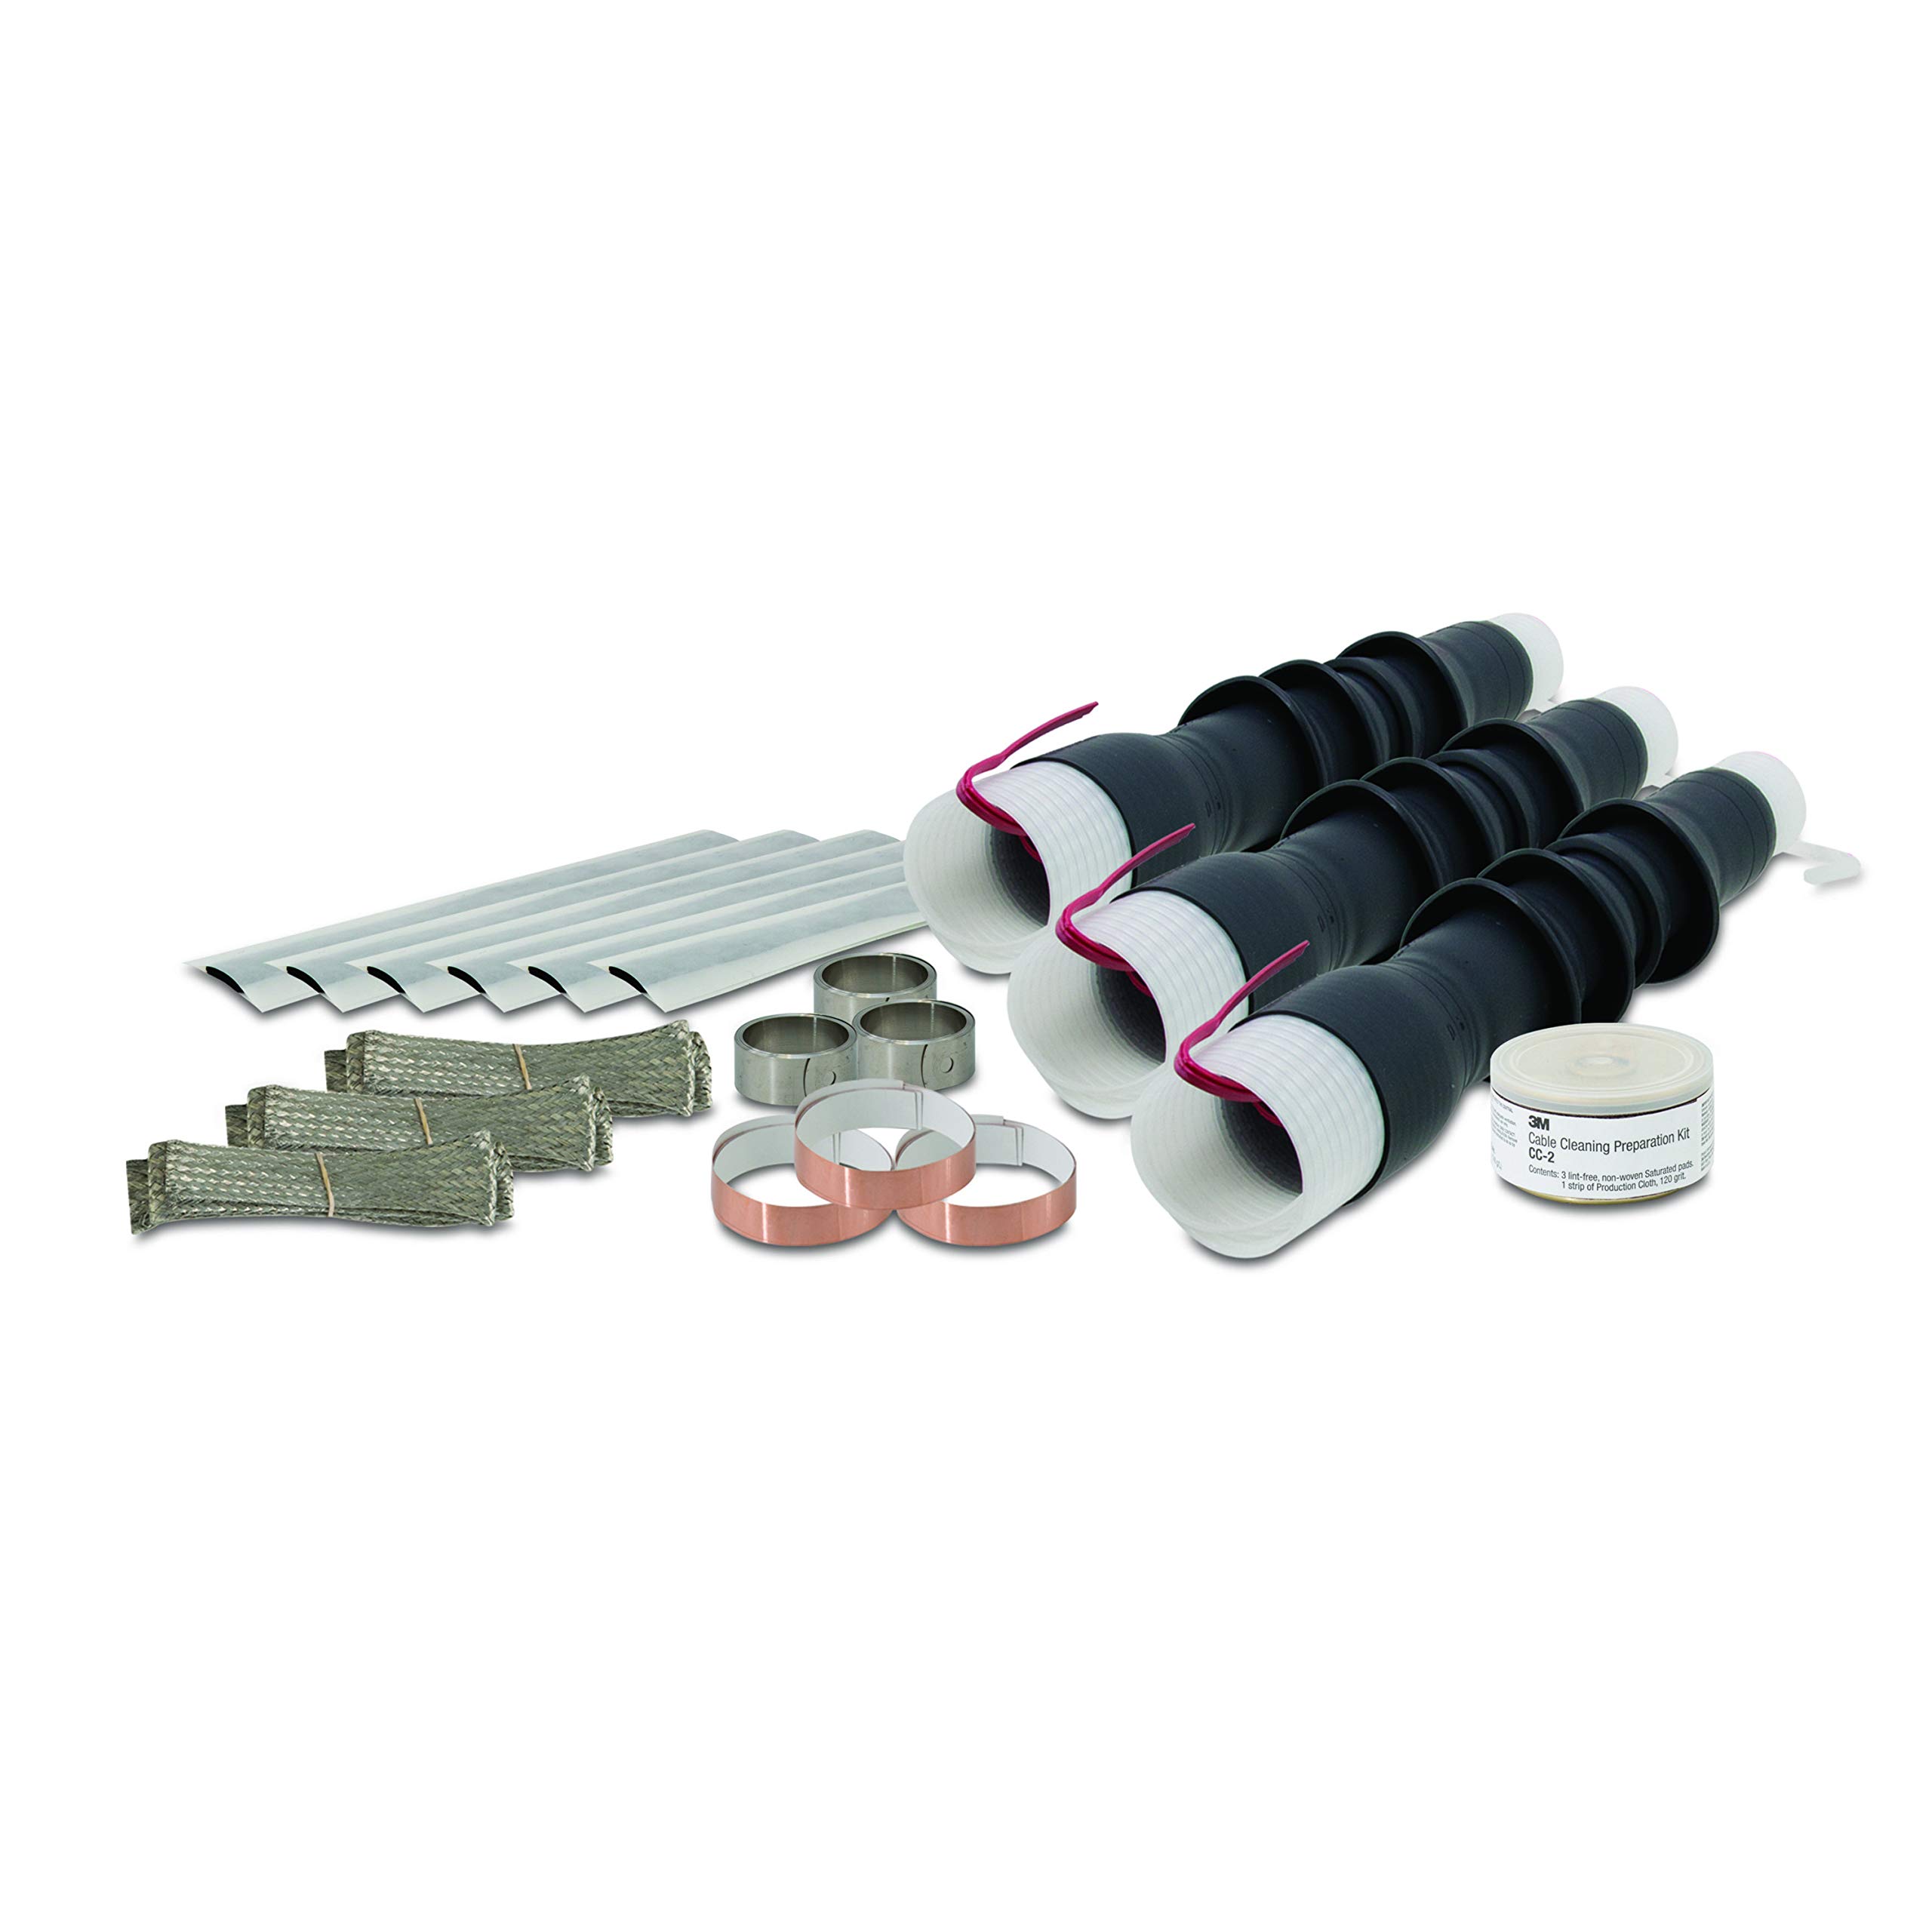 Cold Shrink QT-III 3/C Termination Kit 7622-T-110-3G, Tape/Wire/UniShield®, 5-15 kV, Insulation OD 0.70-0.92 in, 3/kit